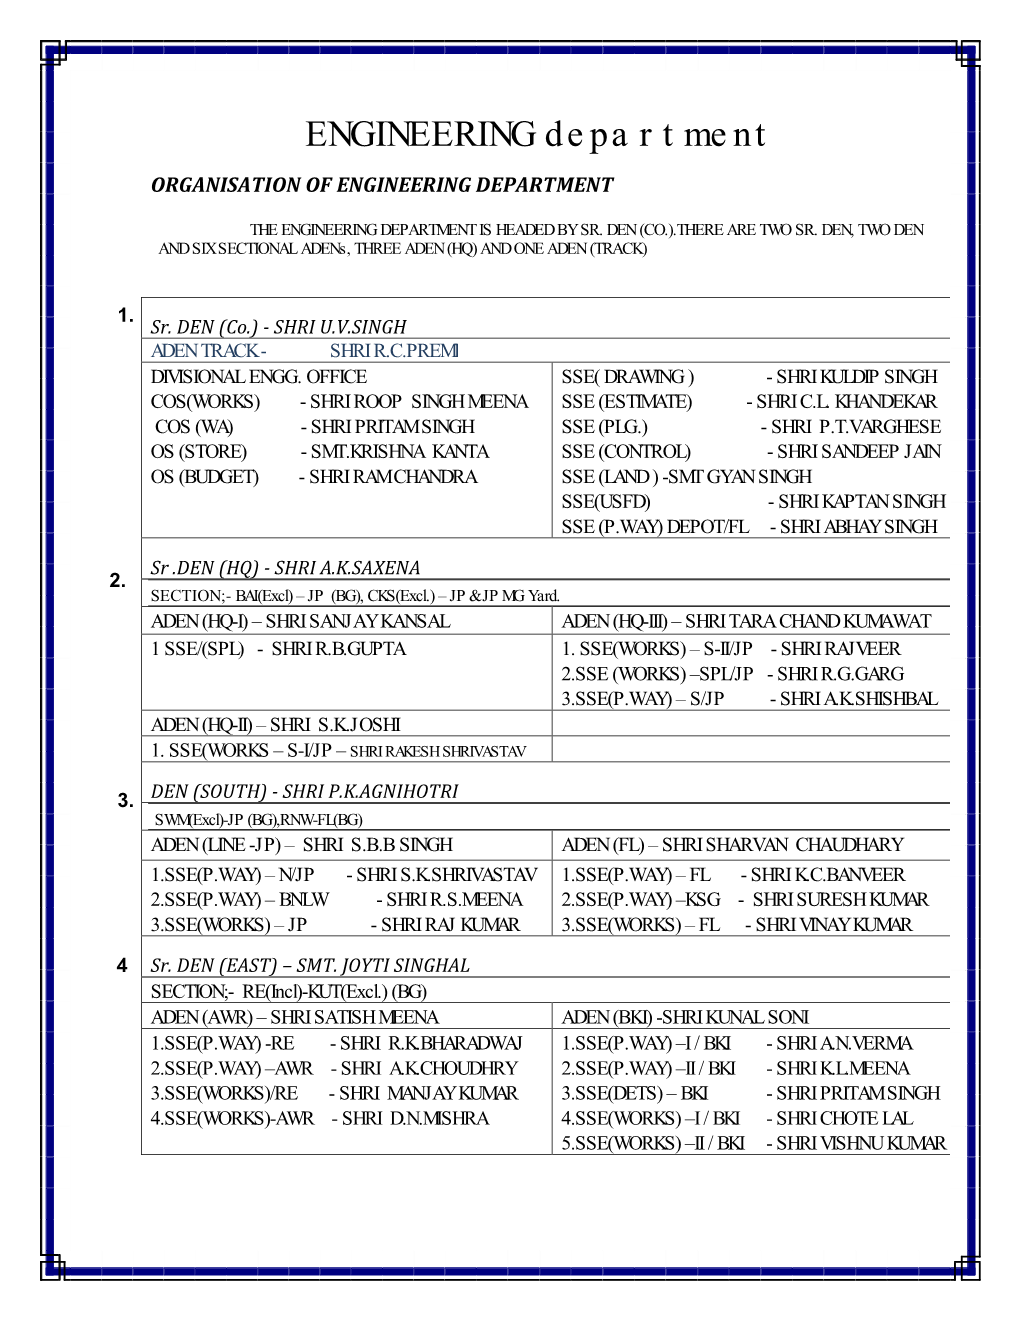 ENGINEERING Department ORGANISATION of ENGINEERING DEPARTMENT